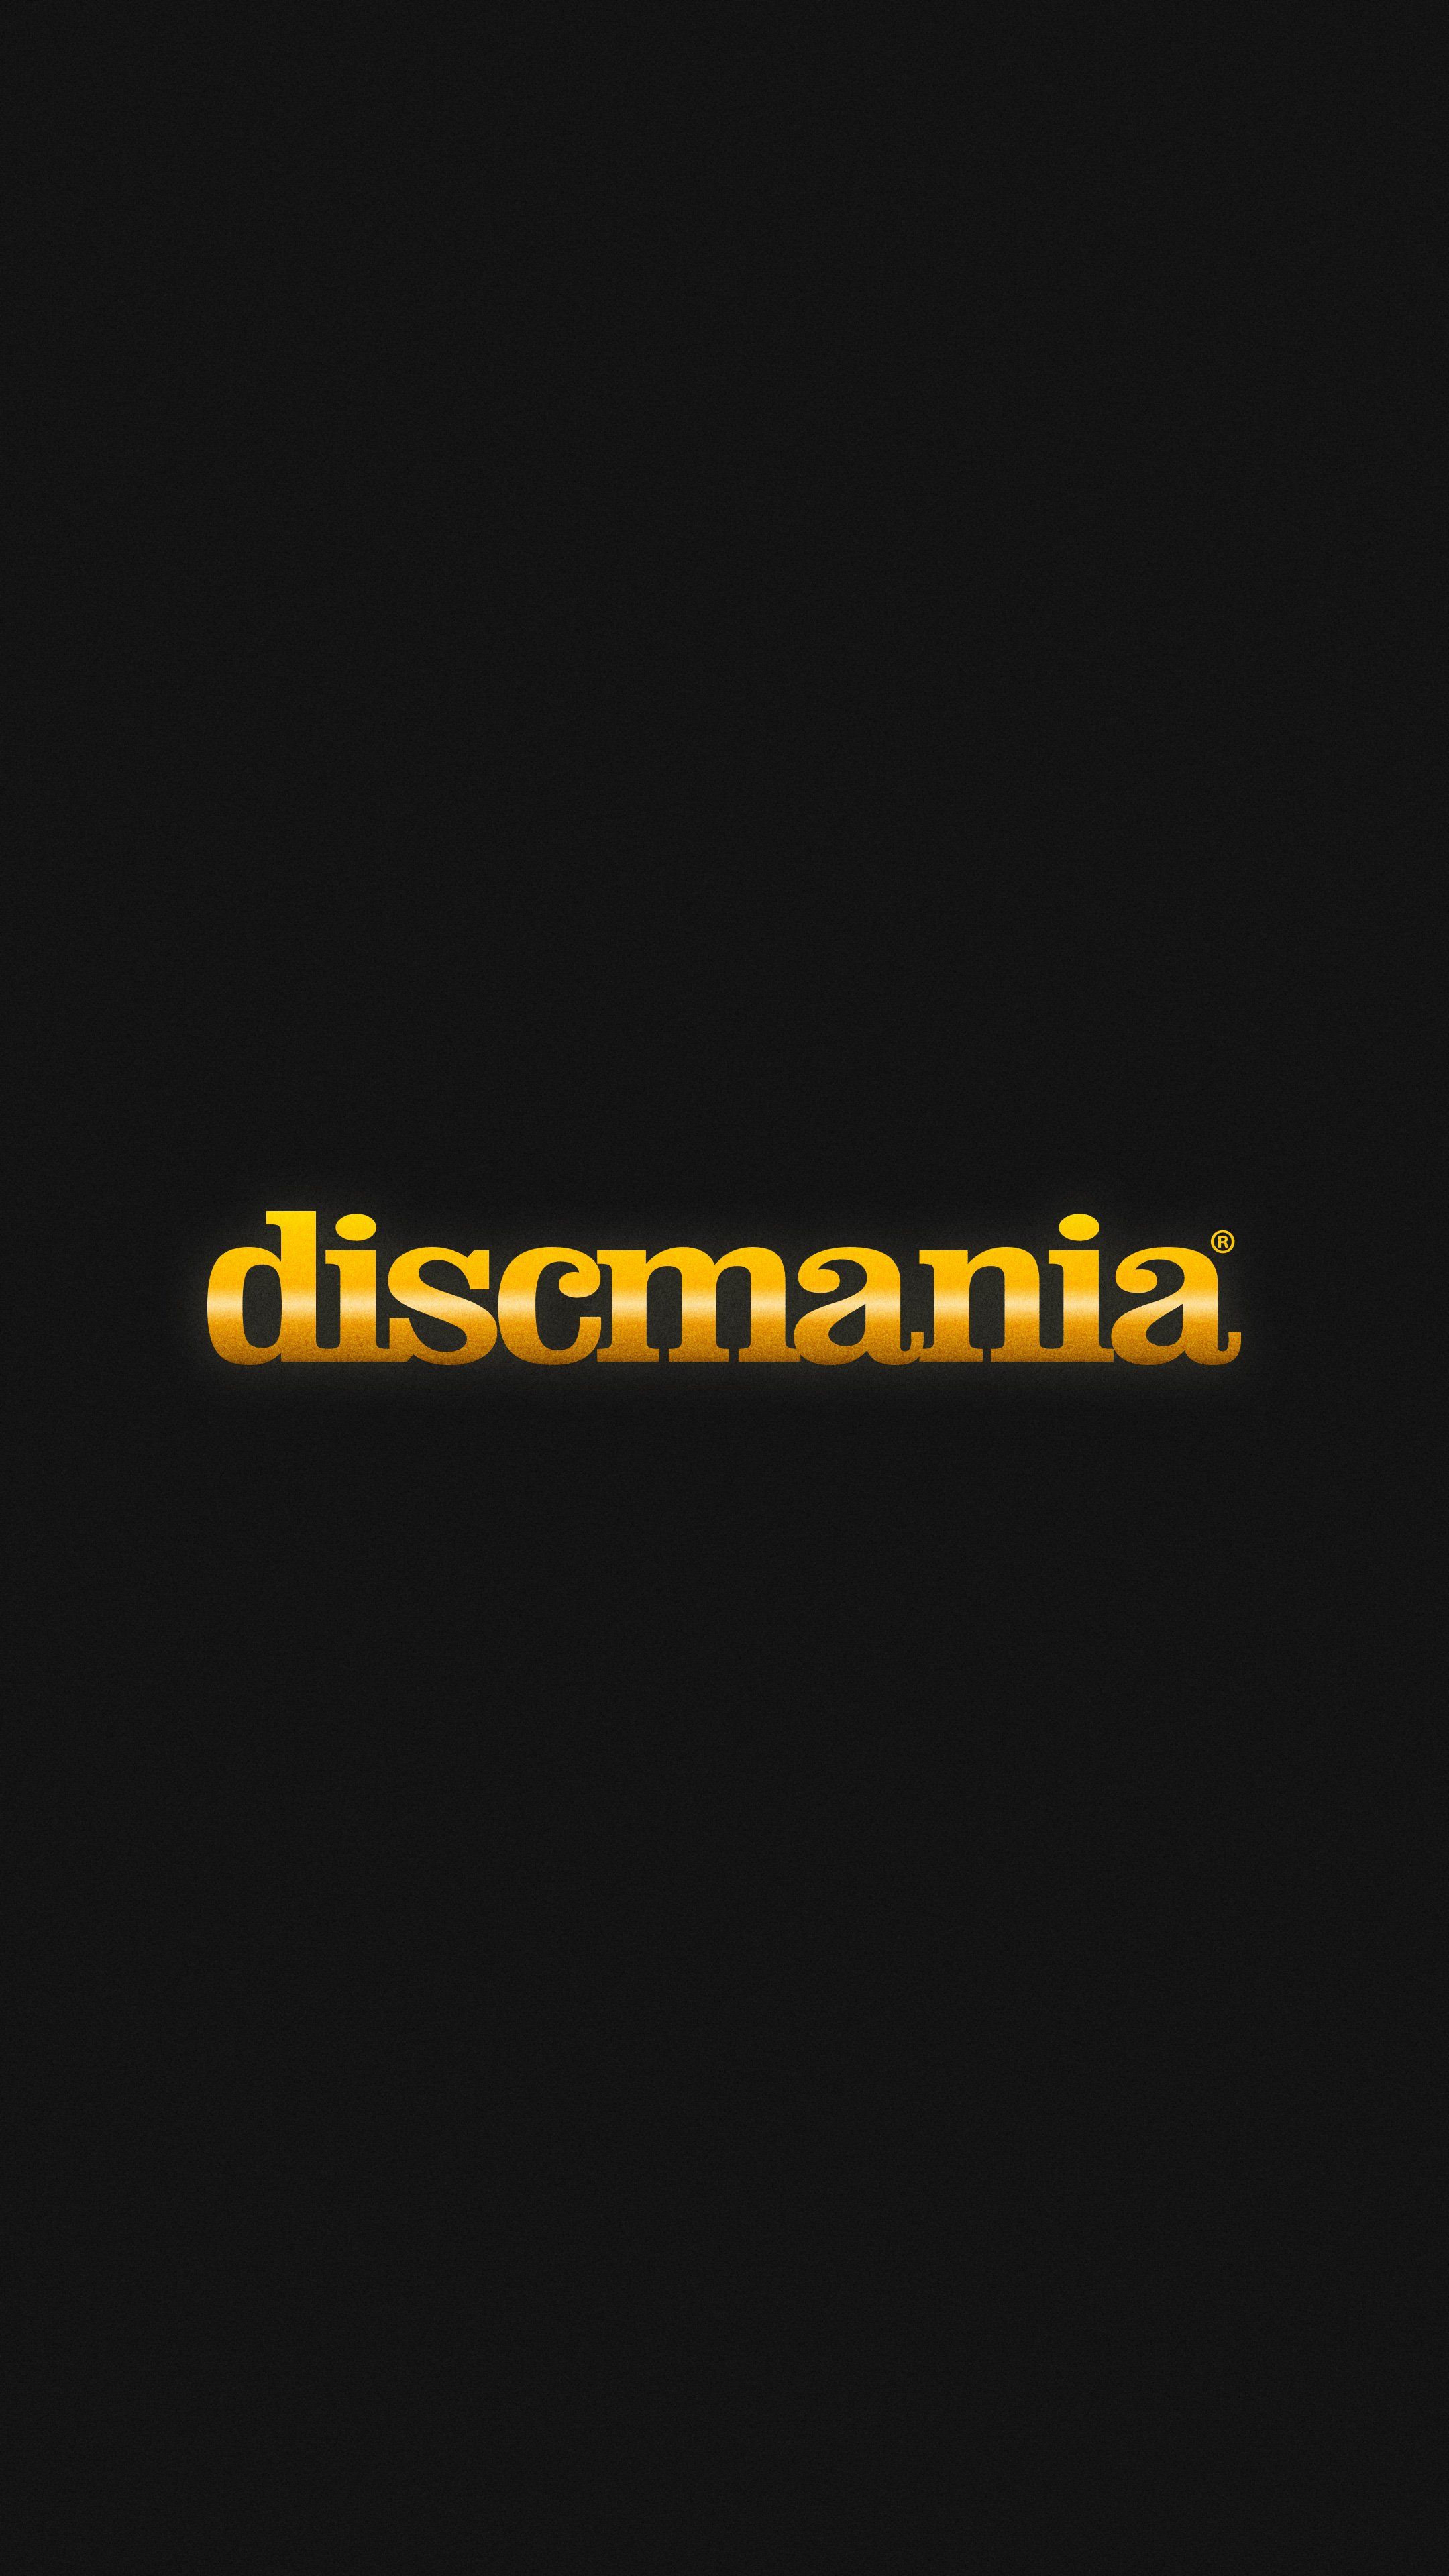 Discmania Mobile and Desktop Wallpaper Part One: USDGC Edition